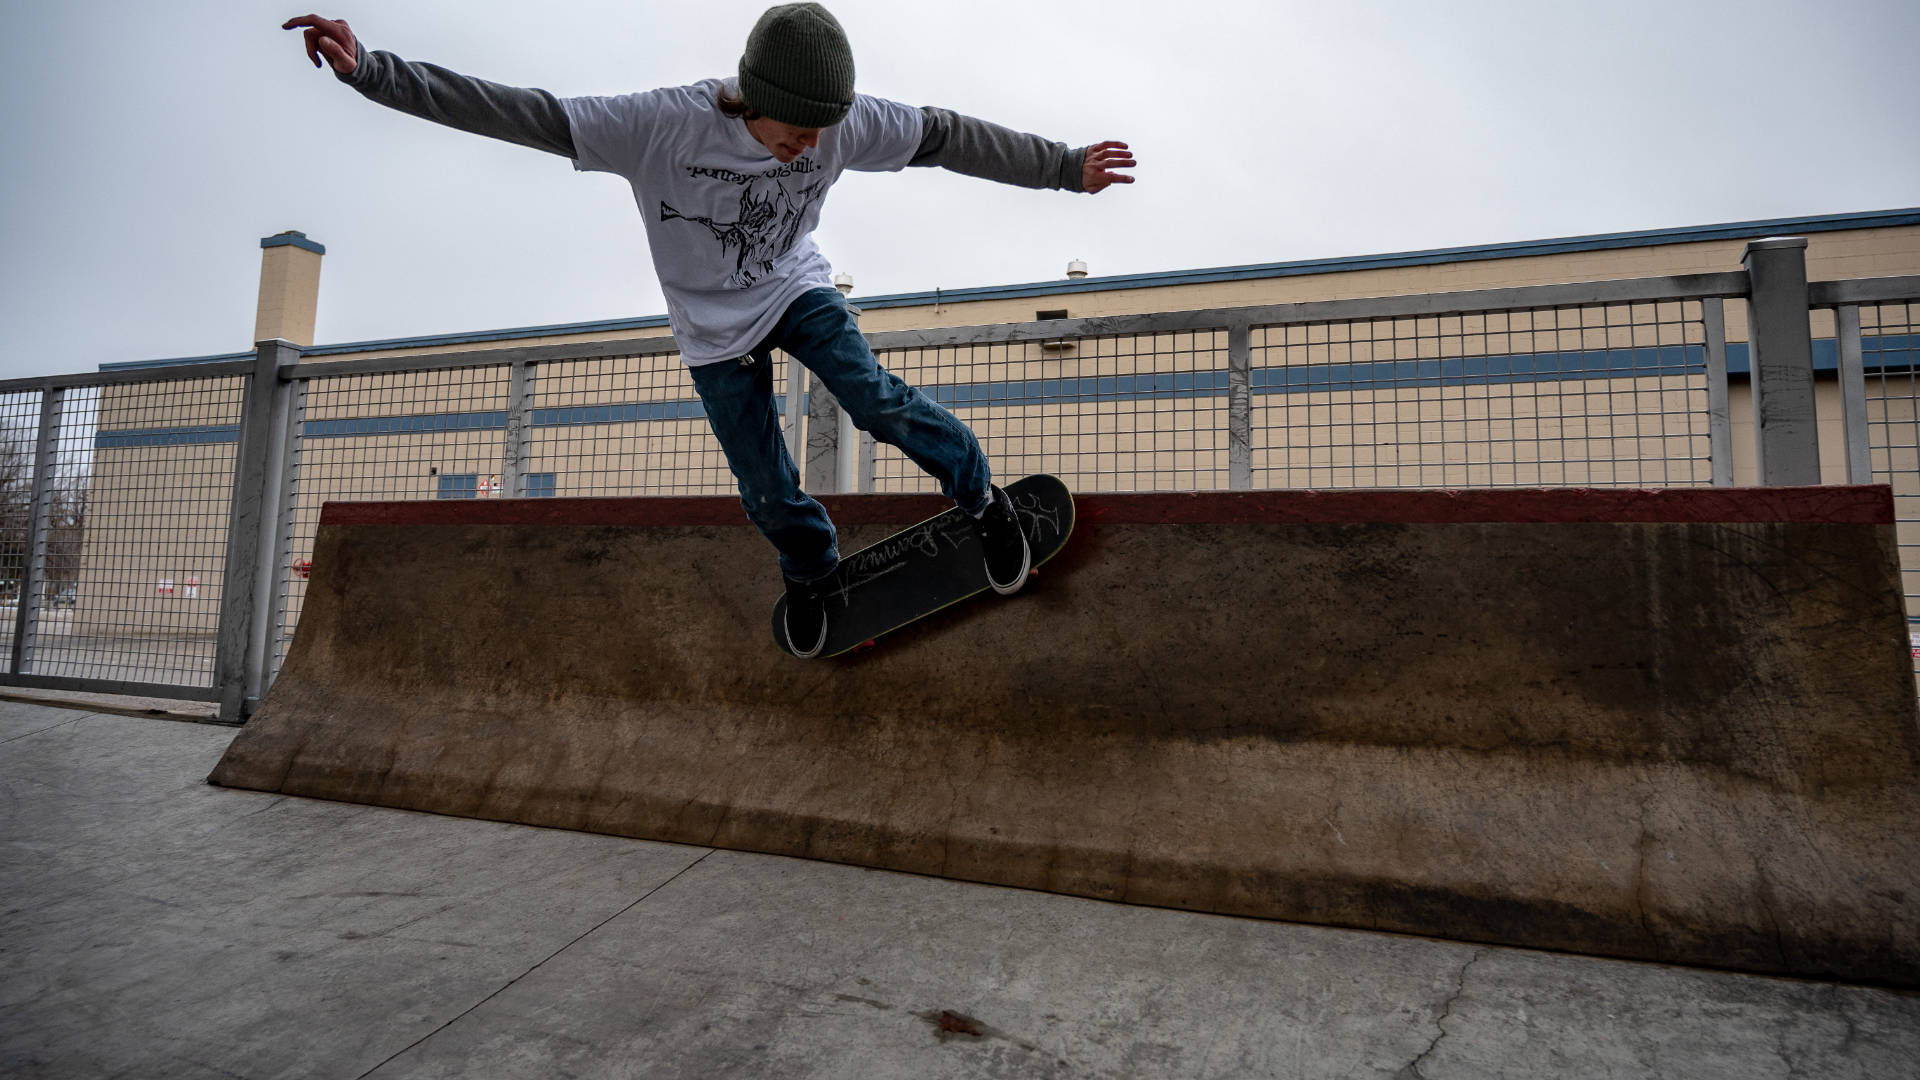 Skater Boy Wall Ride Trick